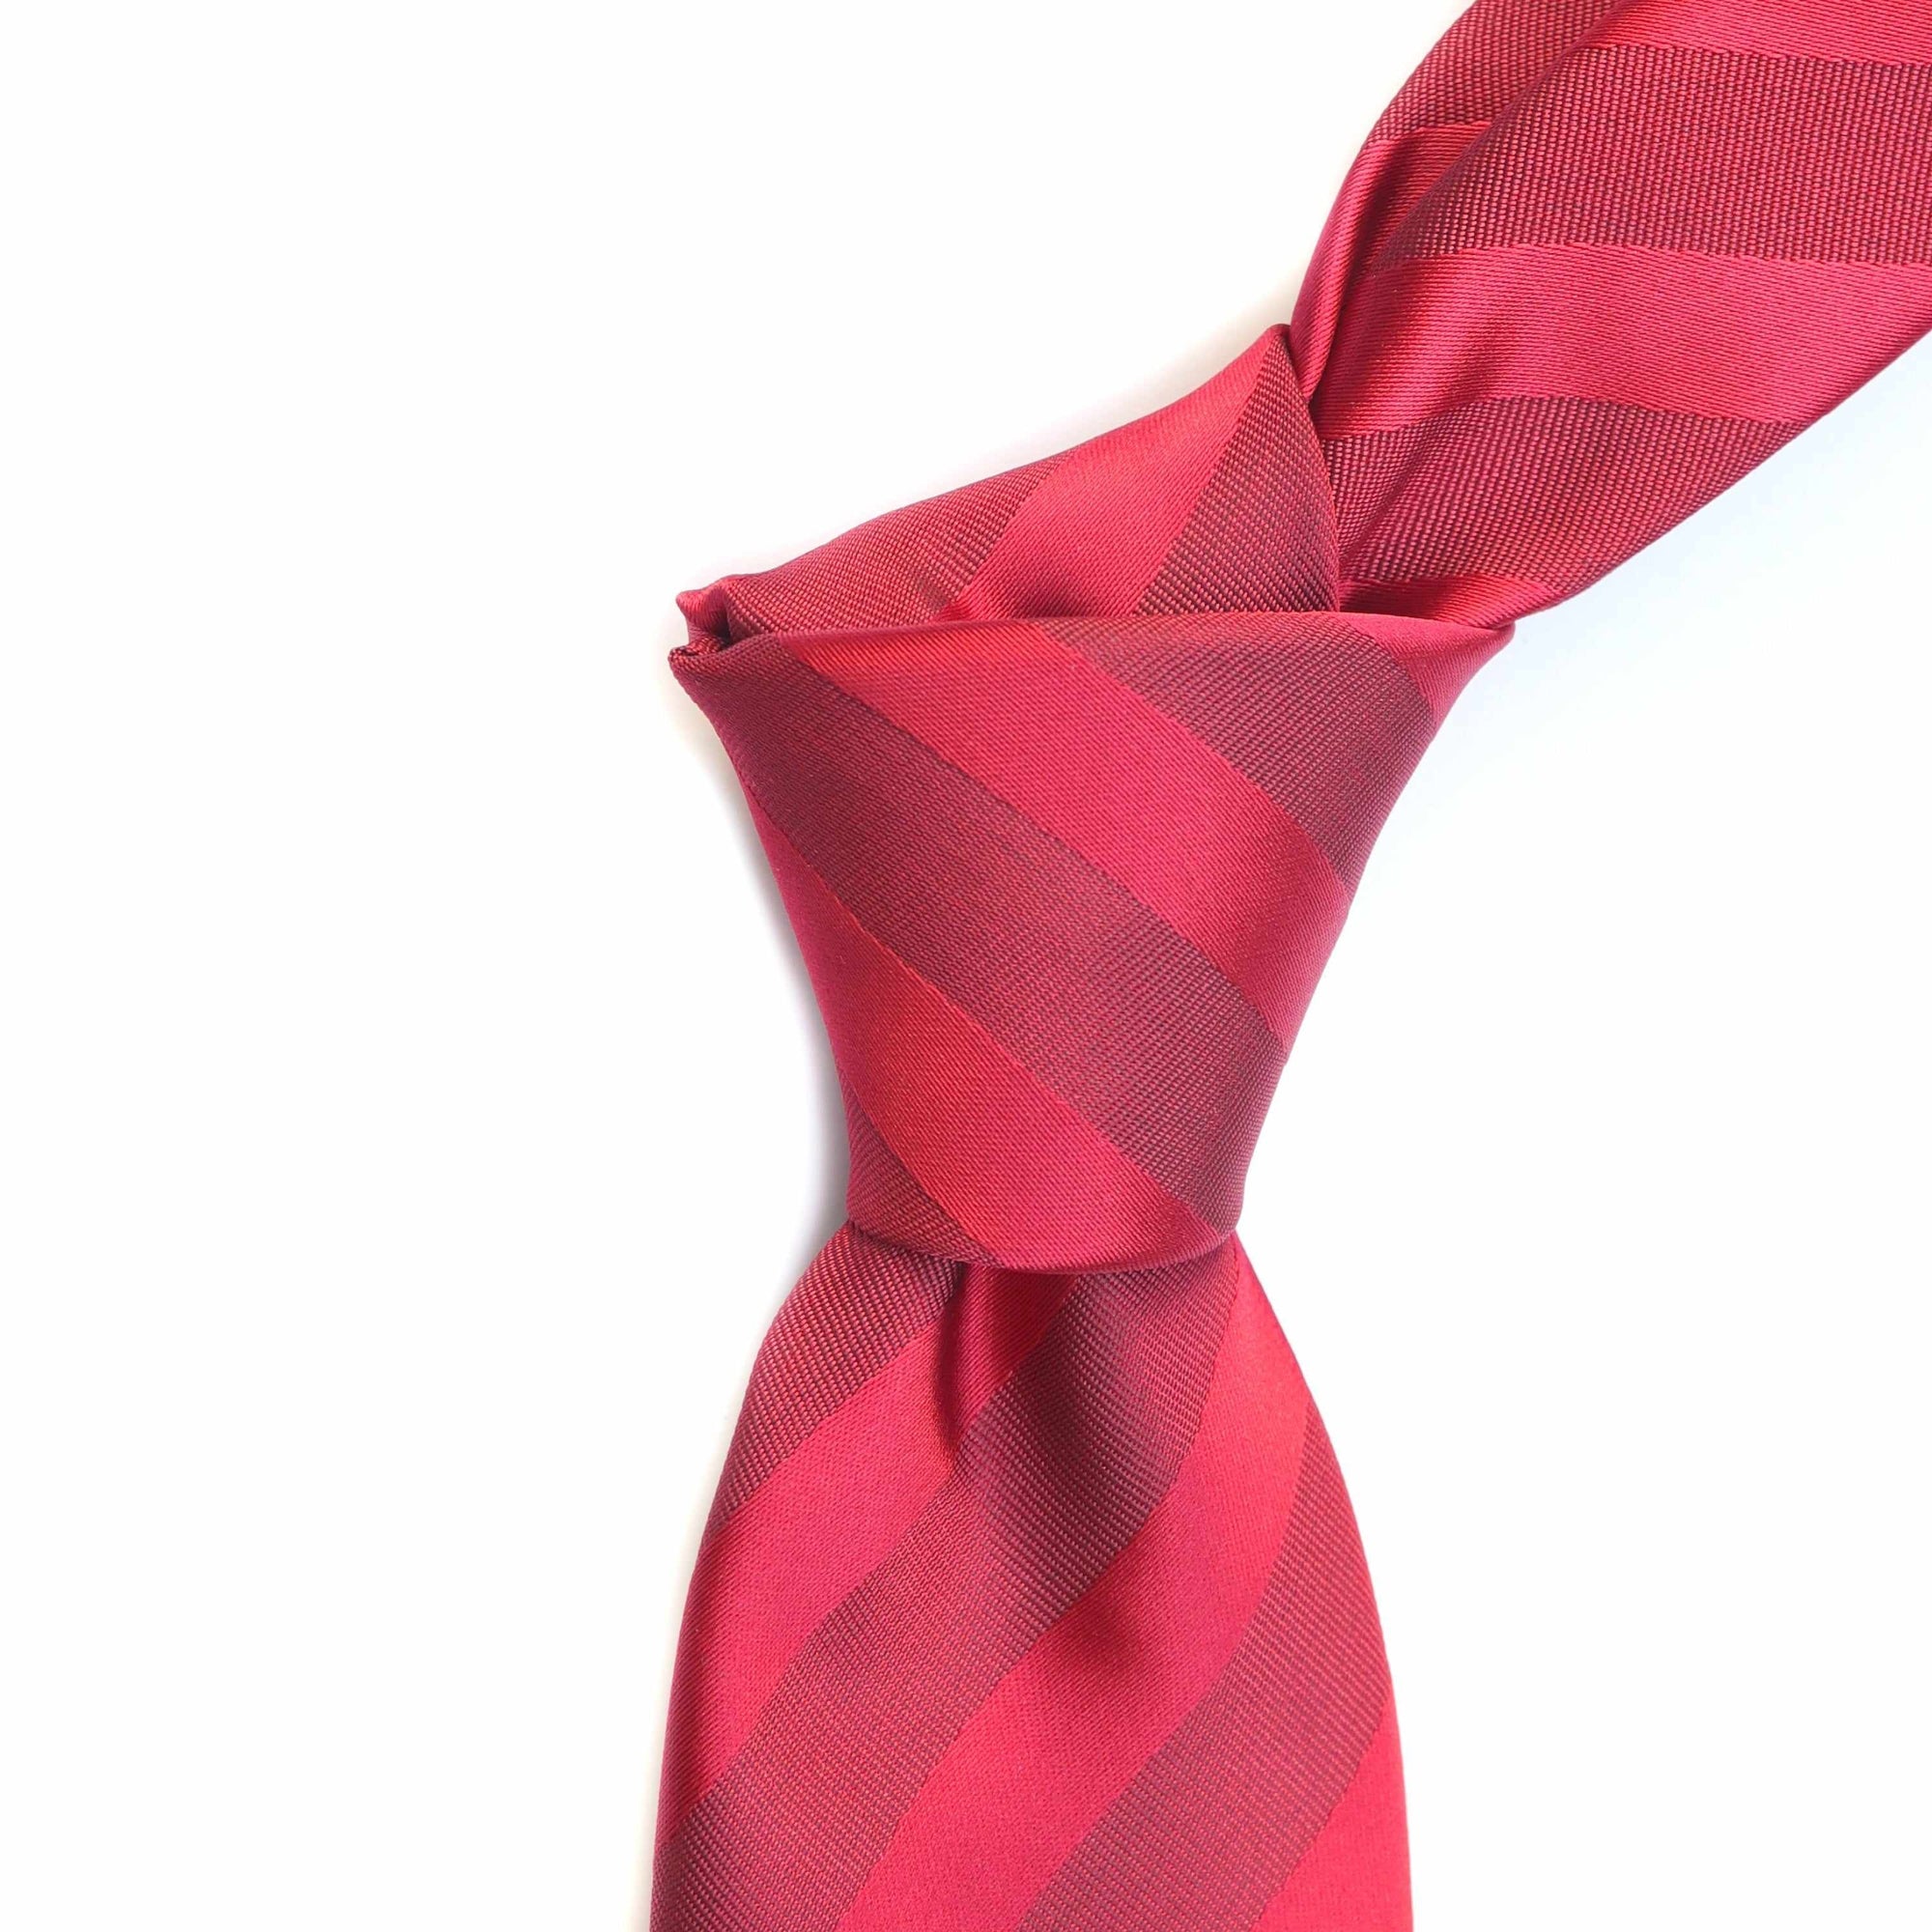 Orobianco L'unique Red Satin with Twill-Neckties-Orobianco L'unique-Cufflinks.com.sg